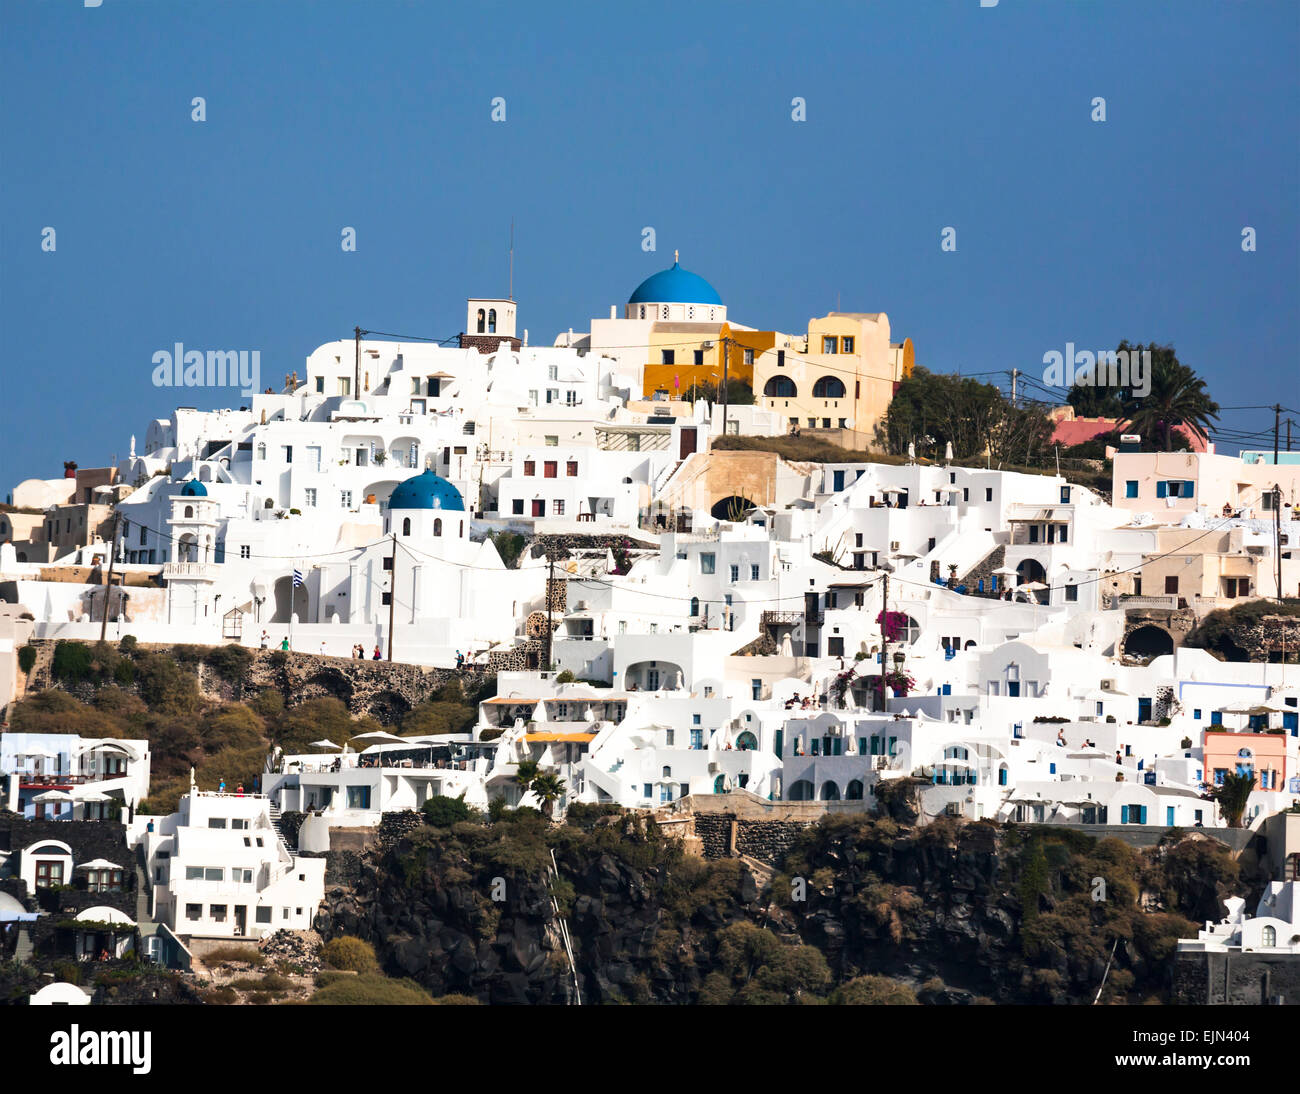 The Village of Imerovigli, Santorini (Thera), Greece Stock Photo